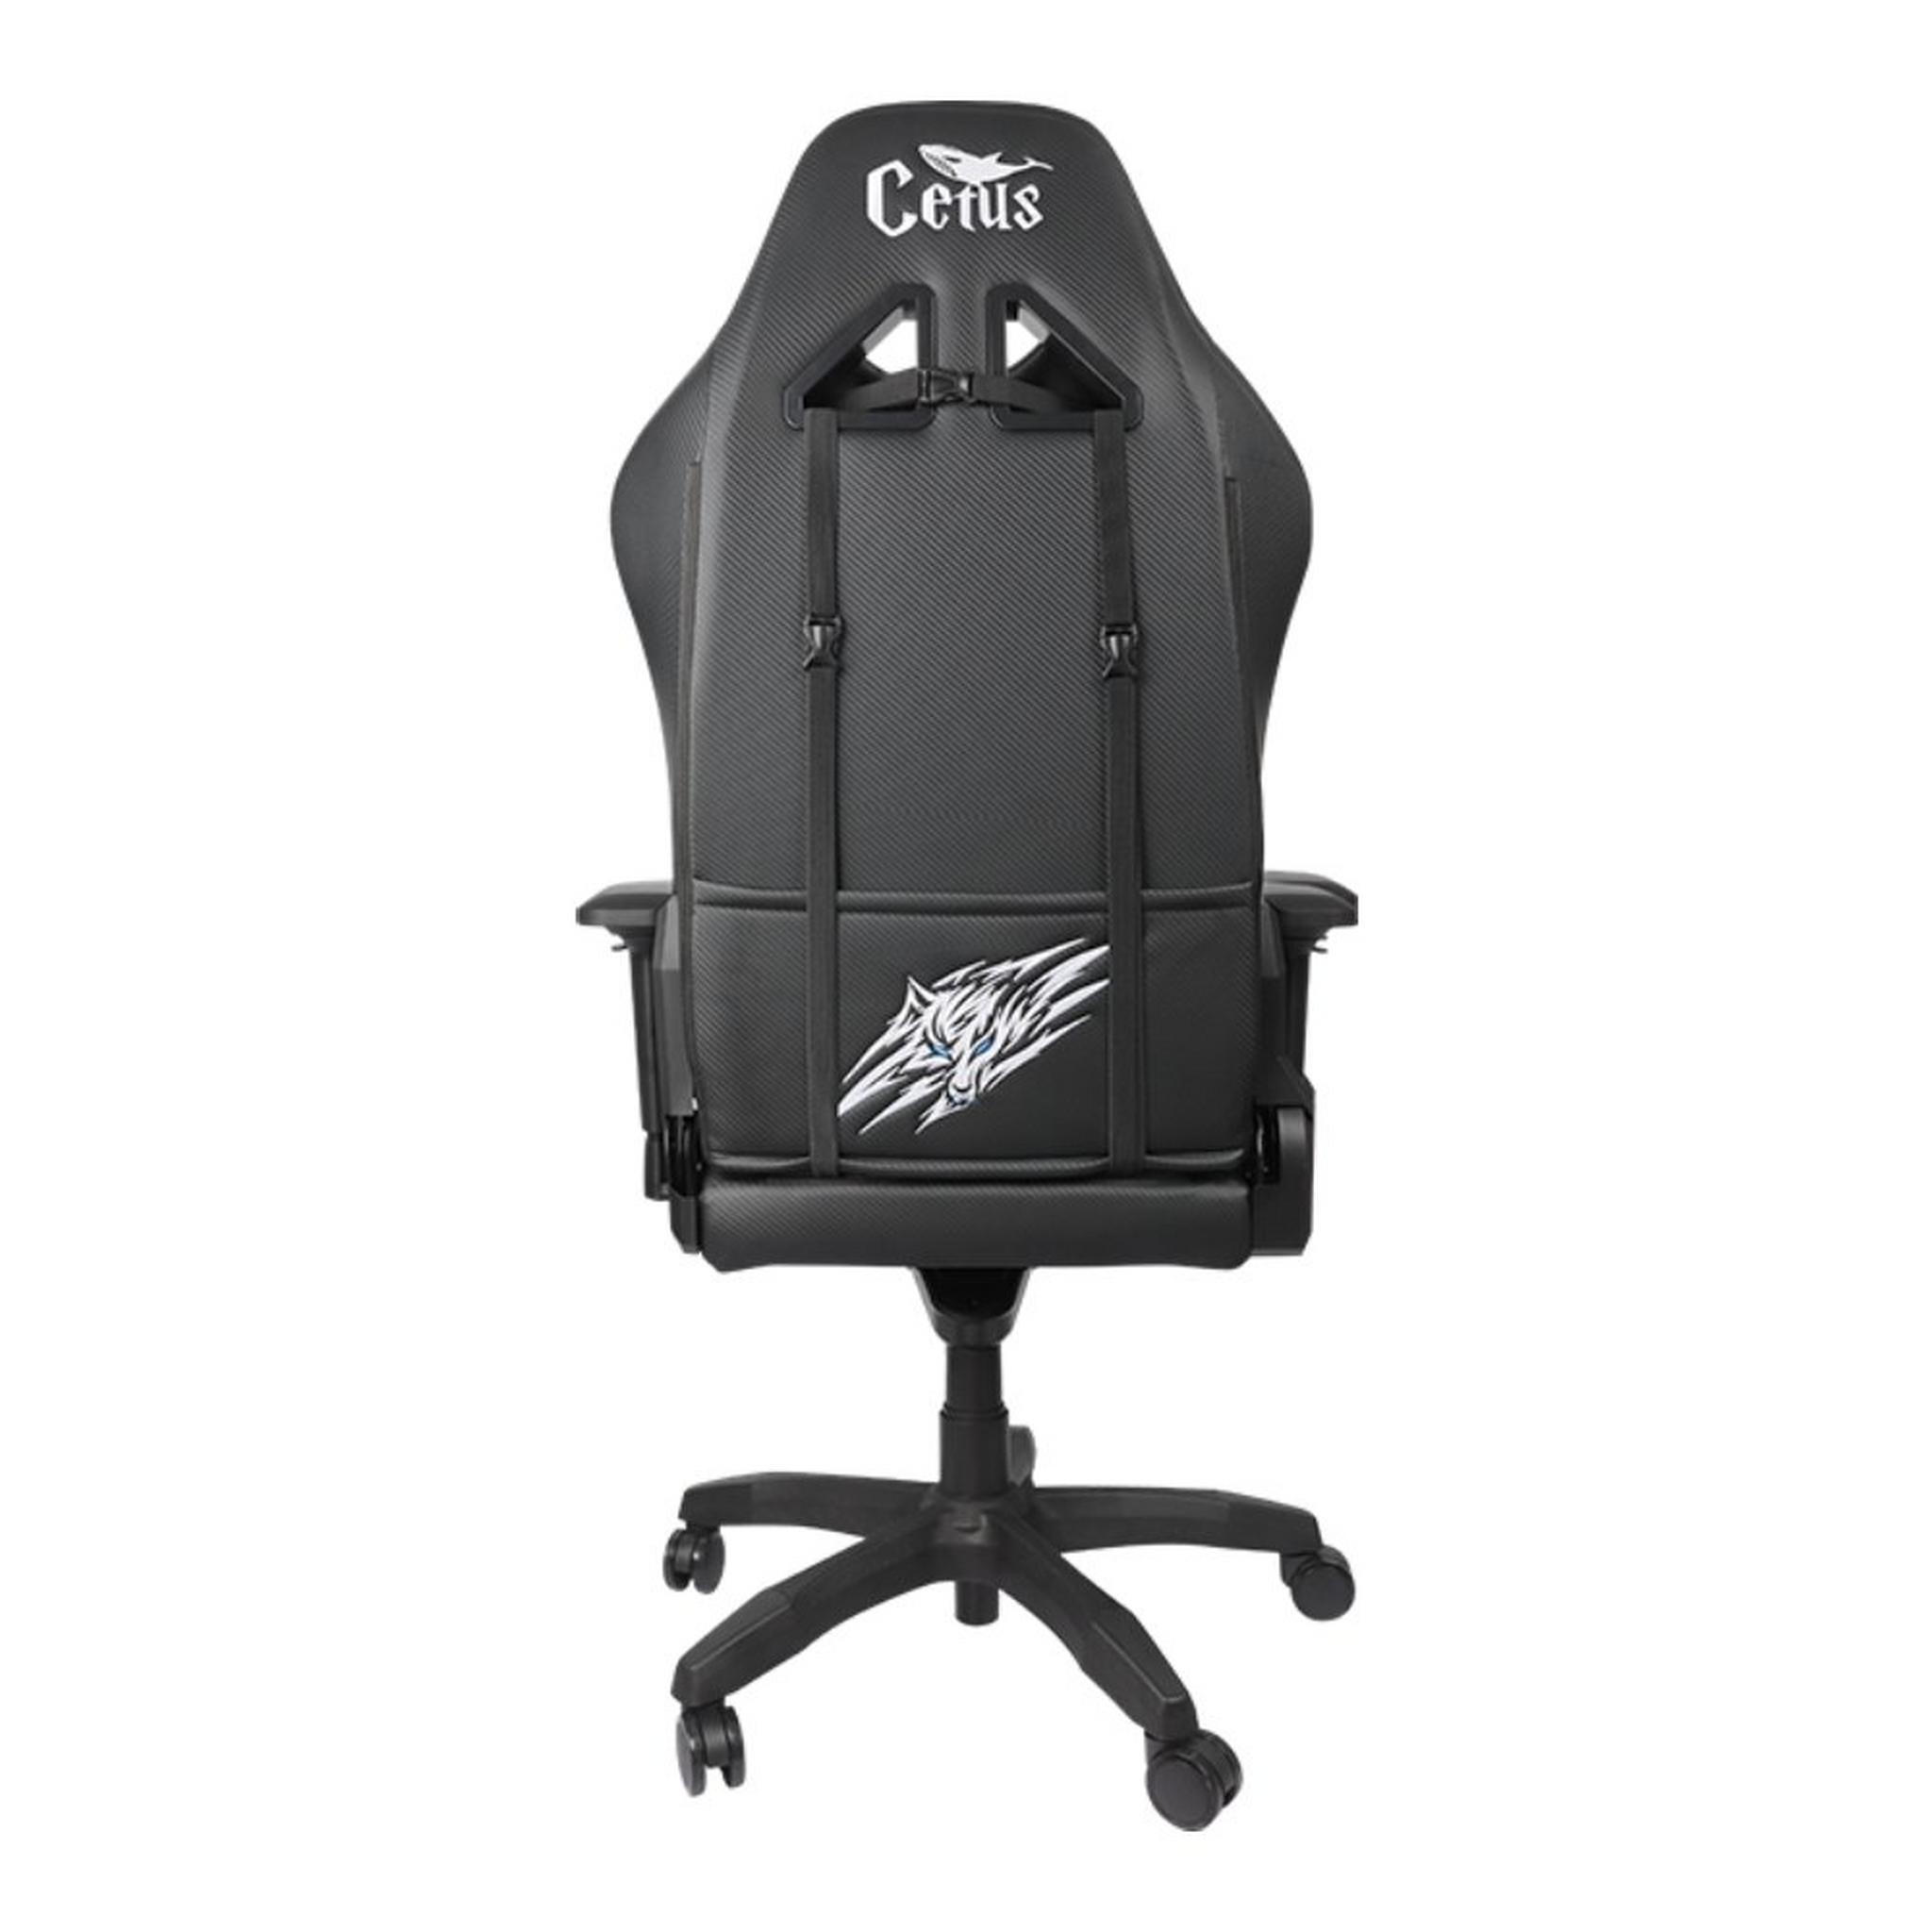 Sades Cetus AD9 Gaming Chair  - Black